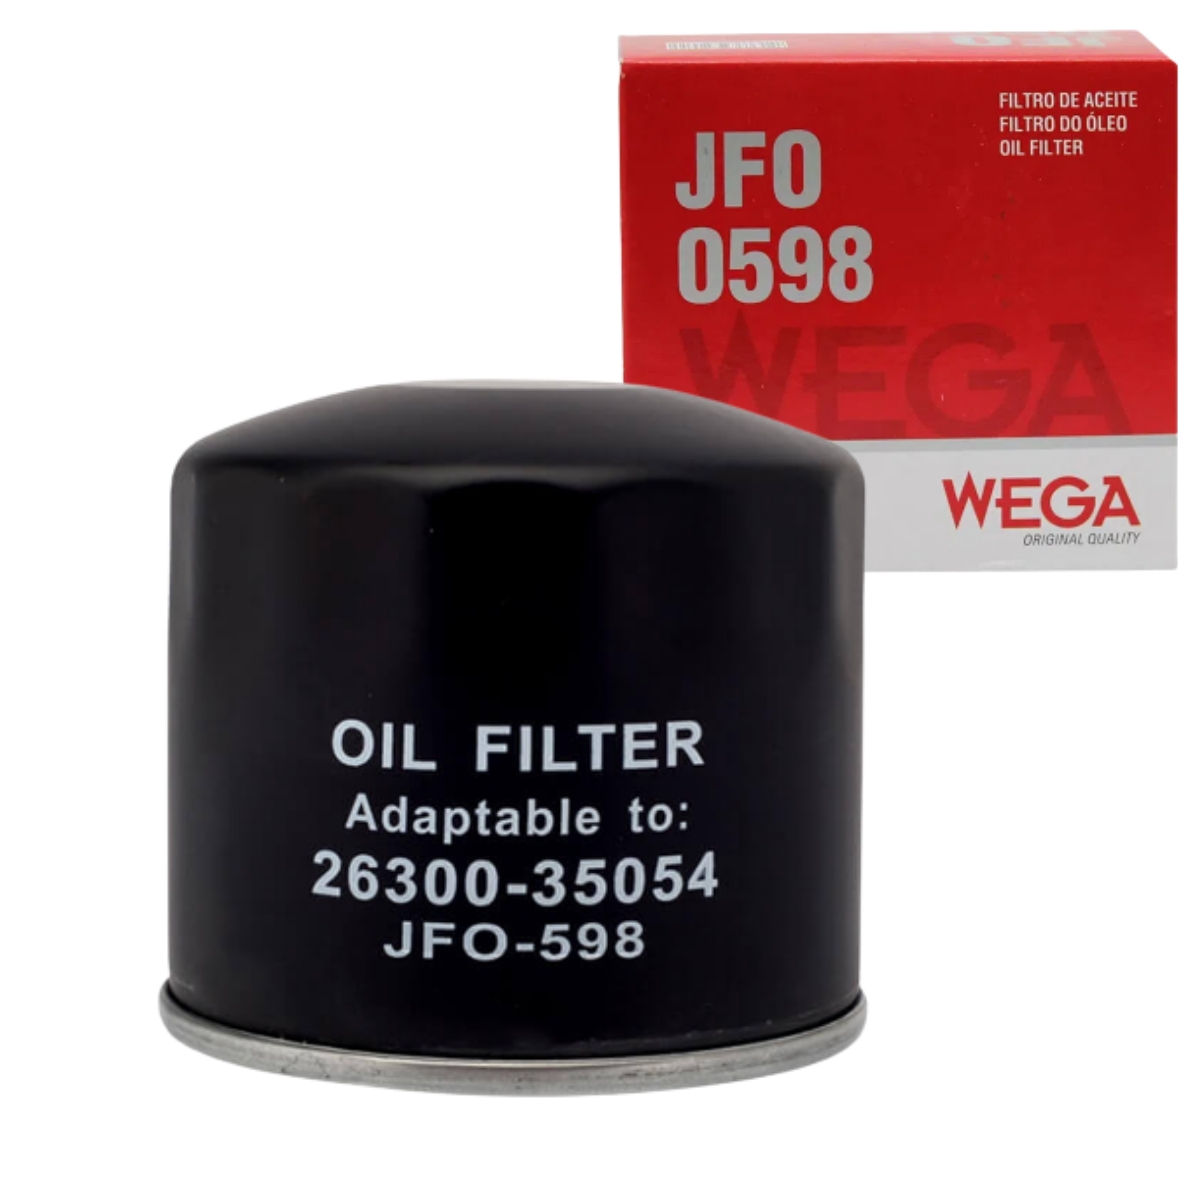 Filtro Oleo Kia Cerato 1.6 16v A Partir De 01/2008 Gasolina Wega Jfo-0598